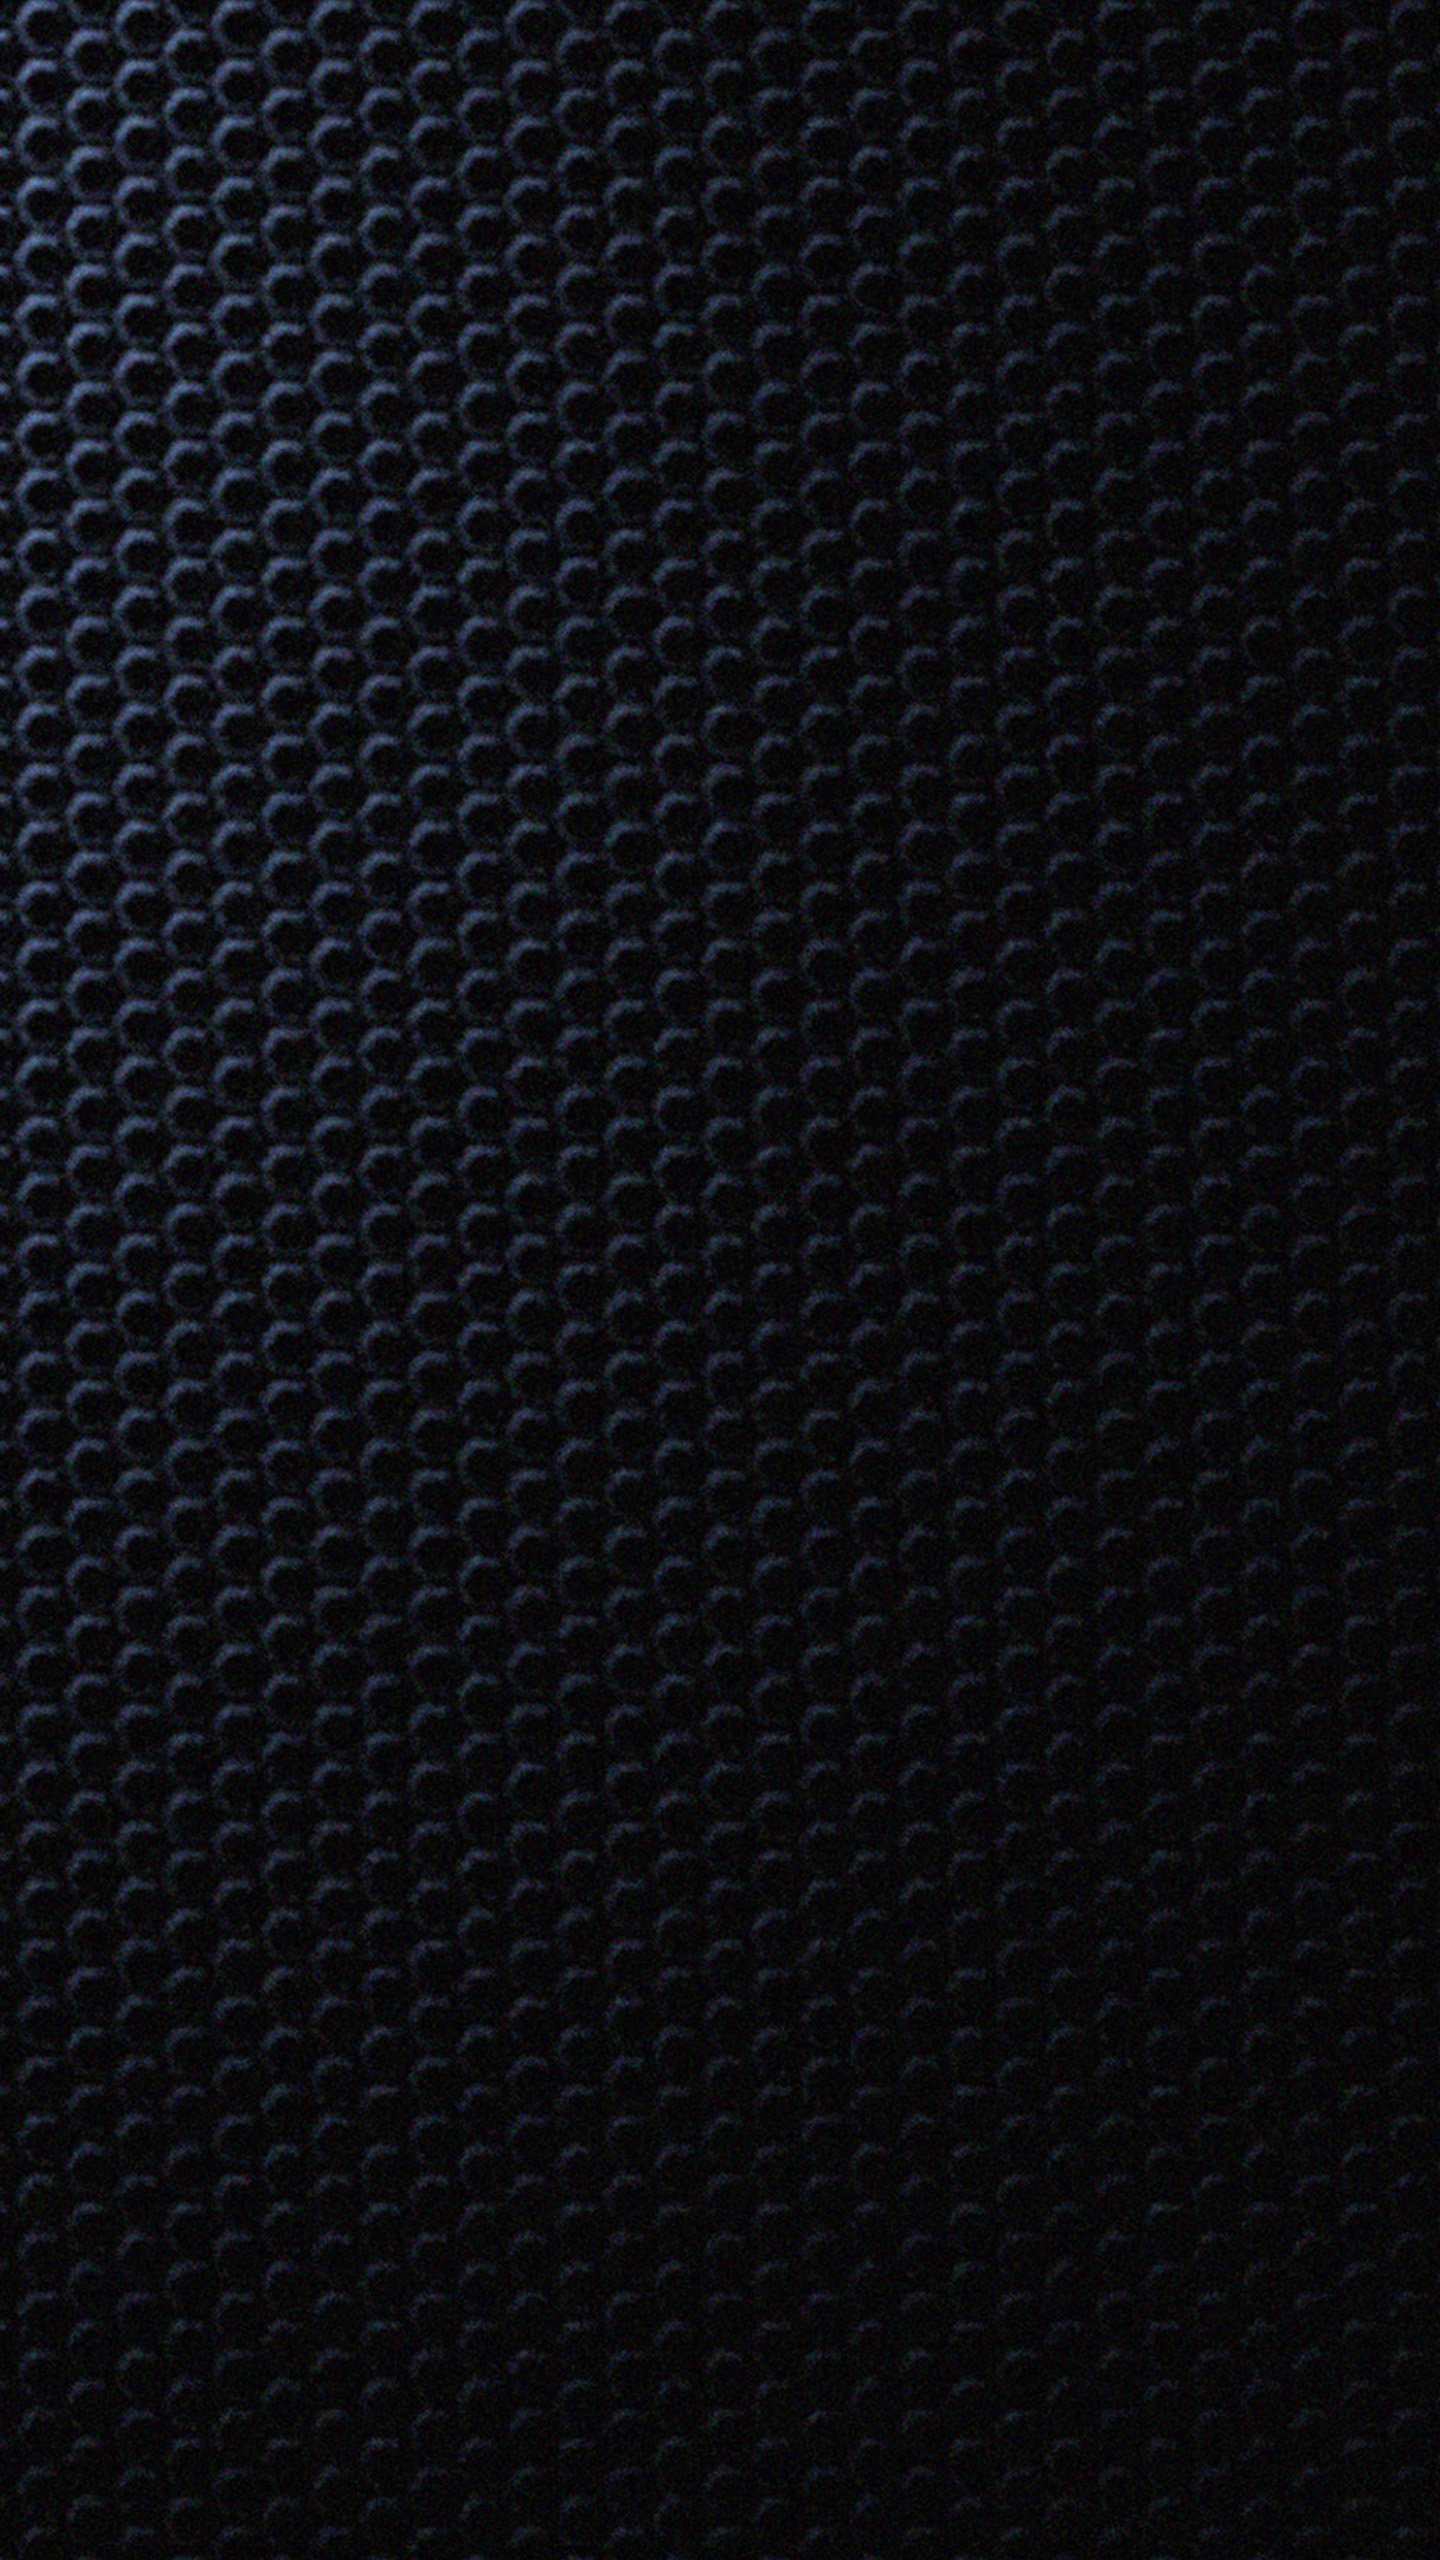 Black Texture 2 Galaxy S6 Wallpaper Galaxy S6 Wallpapers